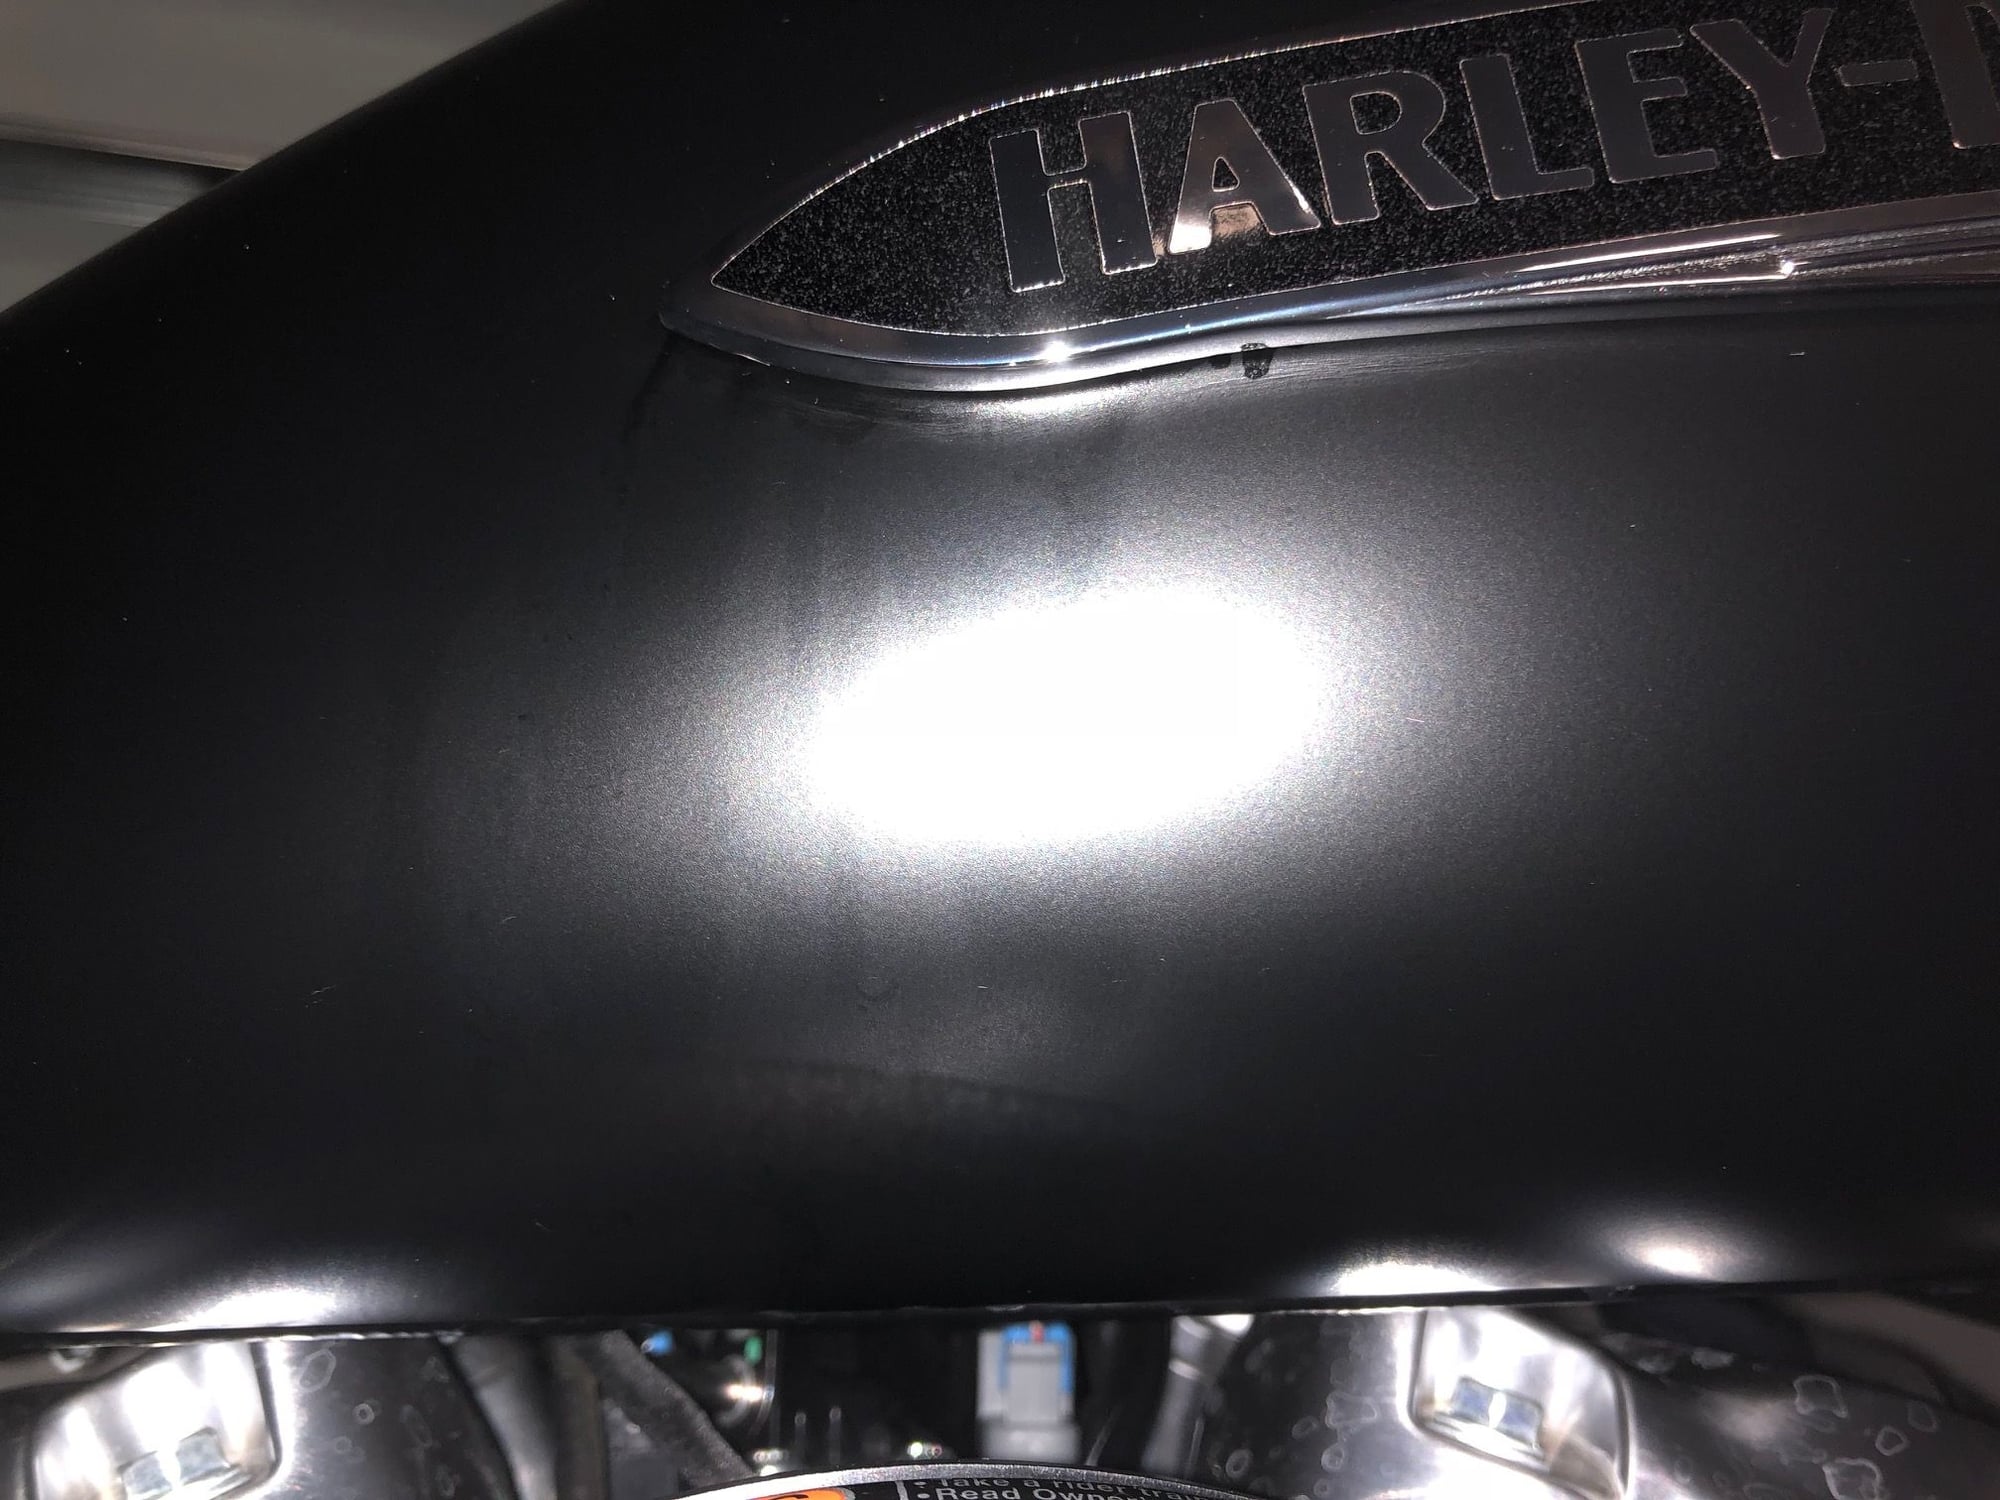 2021 Harley-Davidson Softail Slim MC Commute Review | Motorcyclist